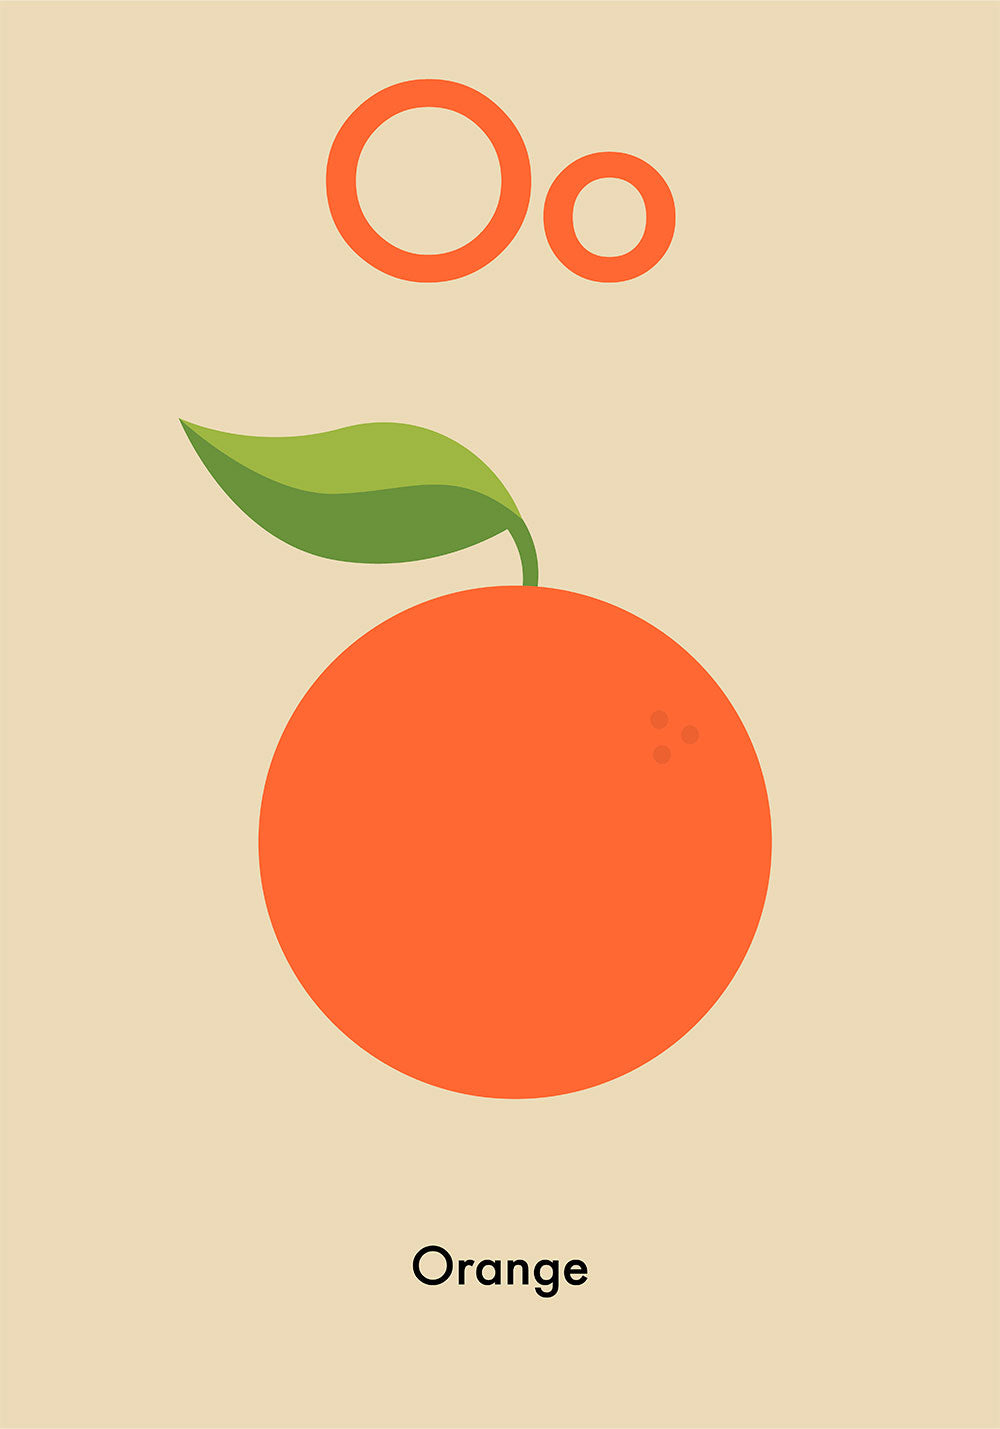 O for Orange - Children's Alphabet Poster in English